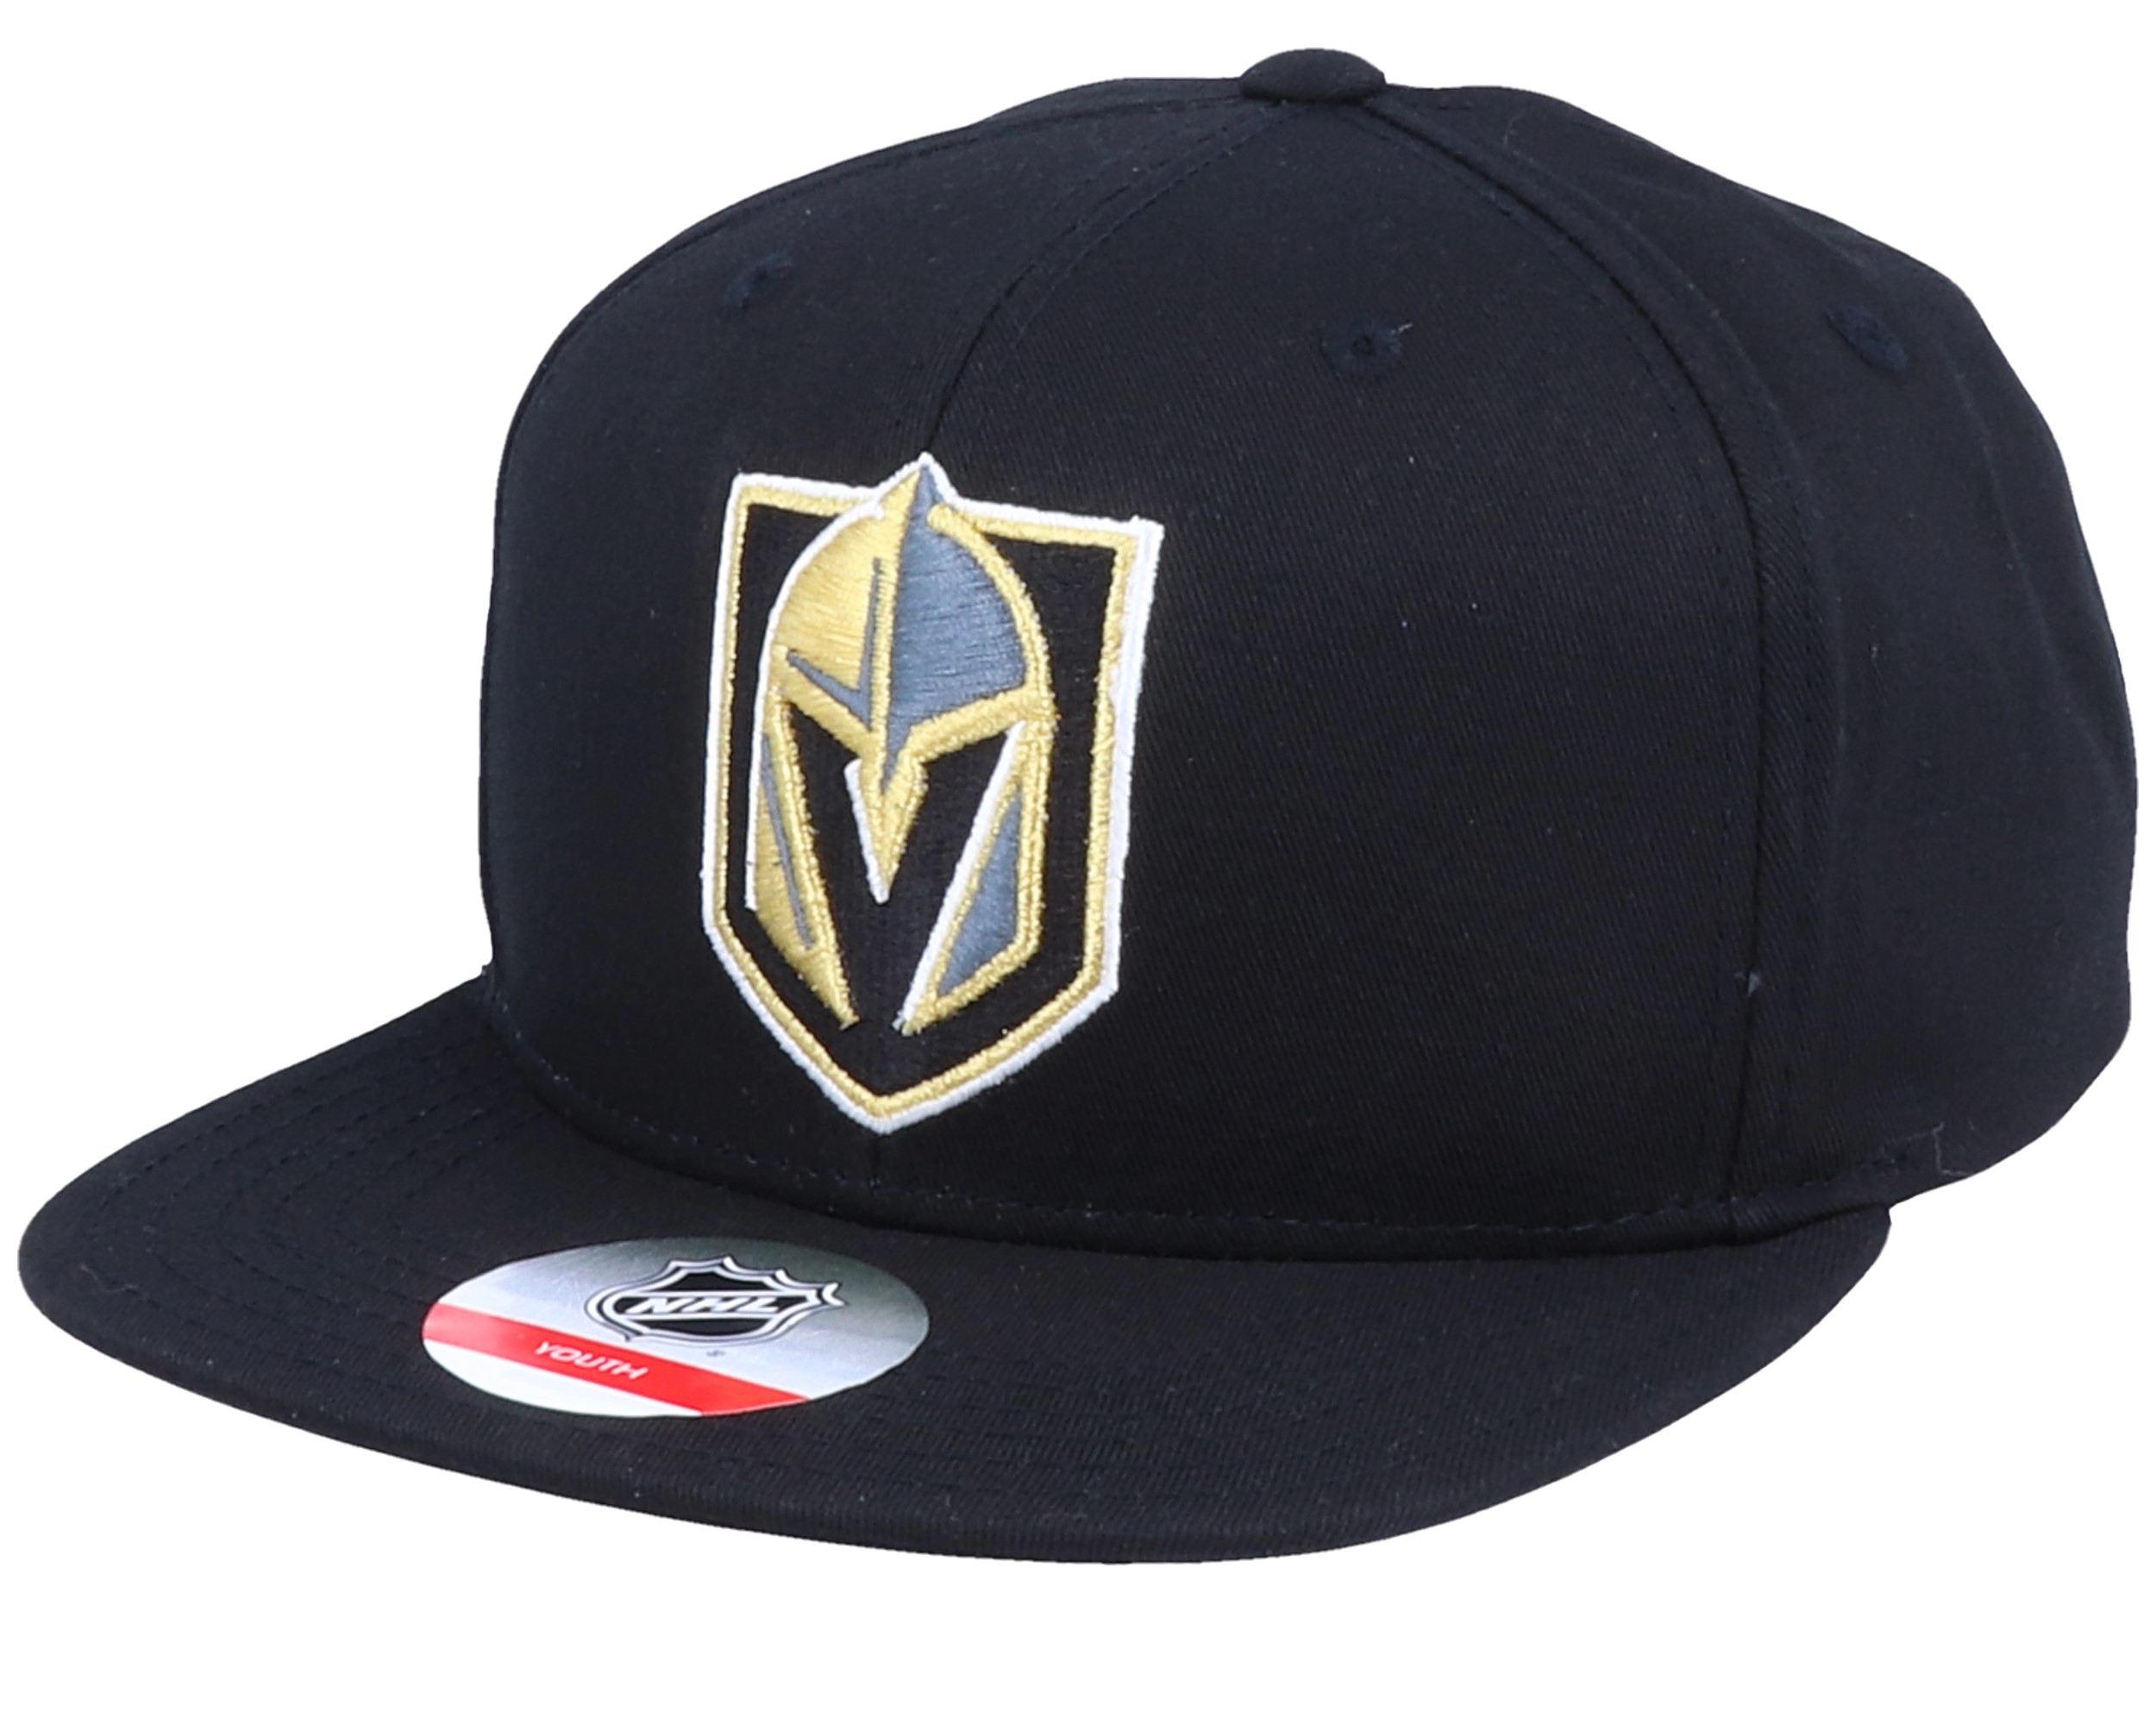 Vegas Golden Knights Hats, Knights Hat, Vegas Golden Knights Knit Hats,  Snapbacks, Knights Caps